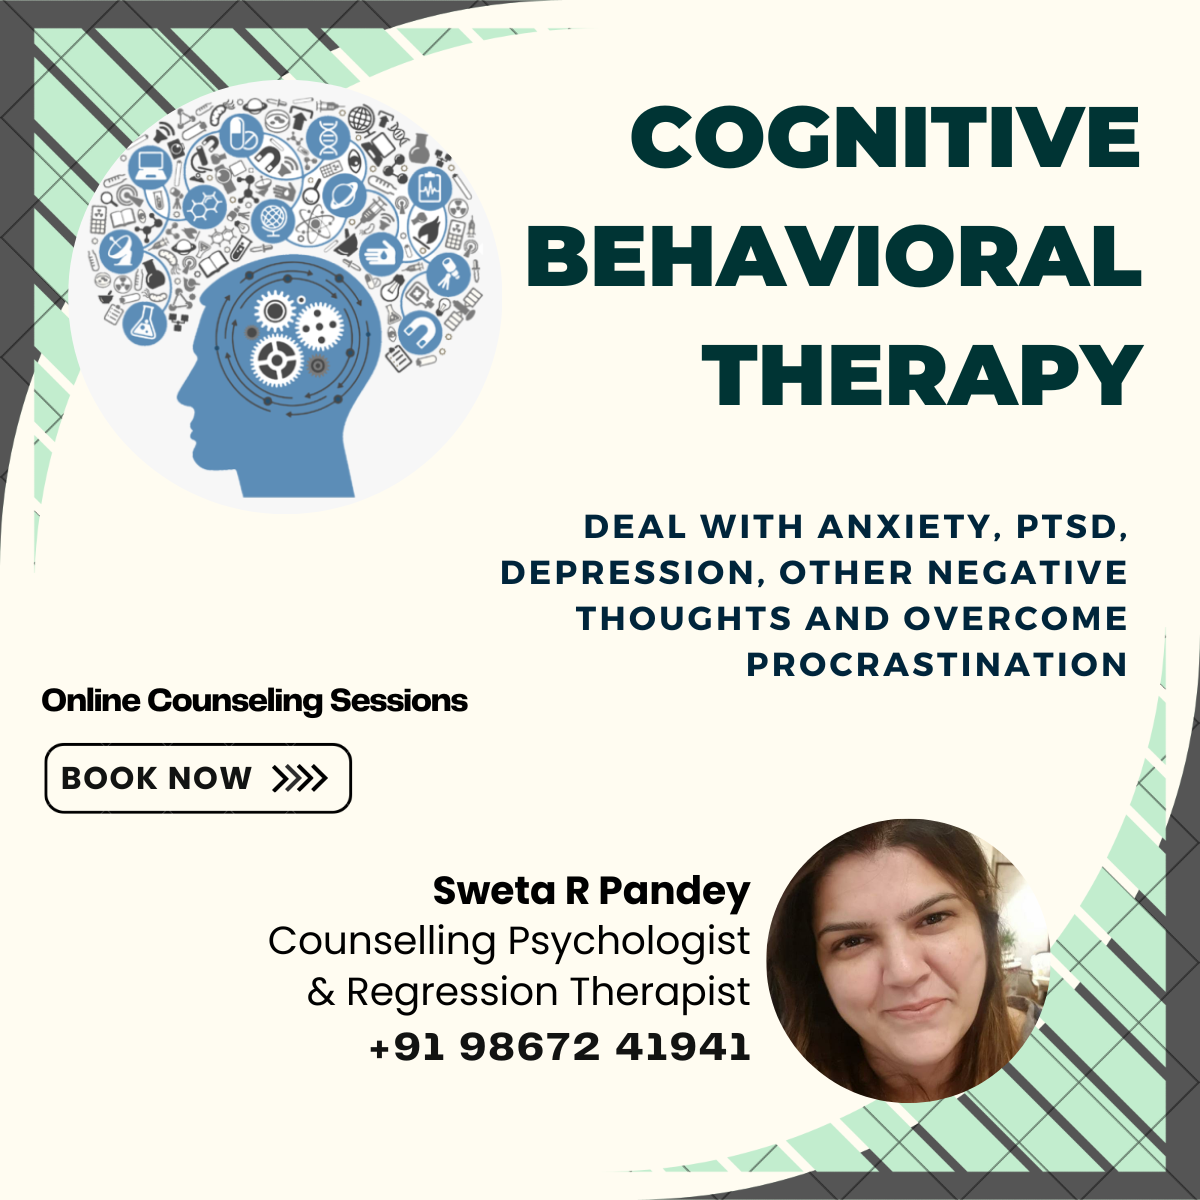 Sweta R Pandey - Cognitive Behavioral Therapy - Nagpur